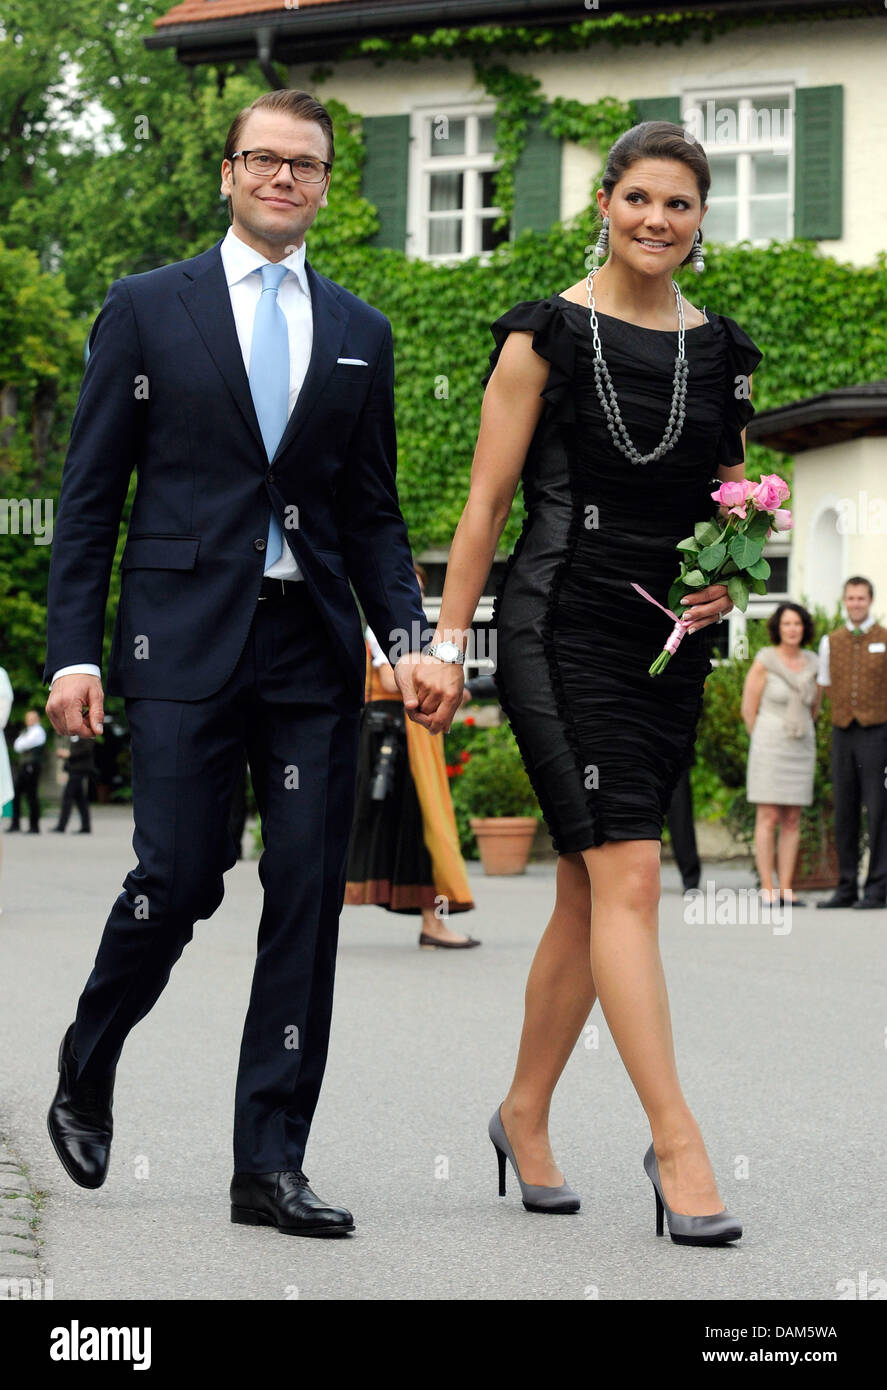 swedish-crown-princess-victoria-and-her-husband-prince-daniel-arrive-DAM5WA.jpg